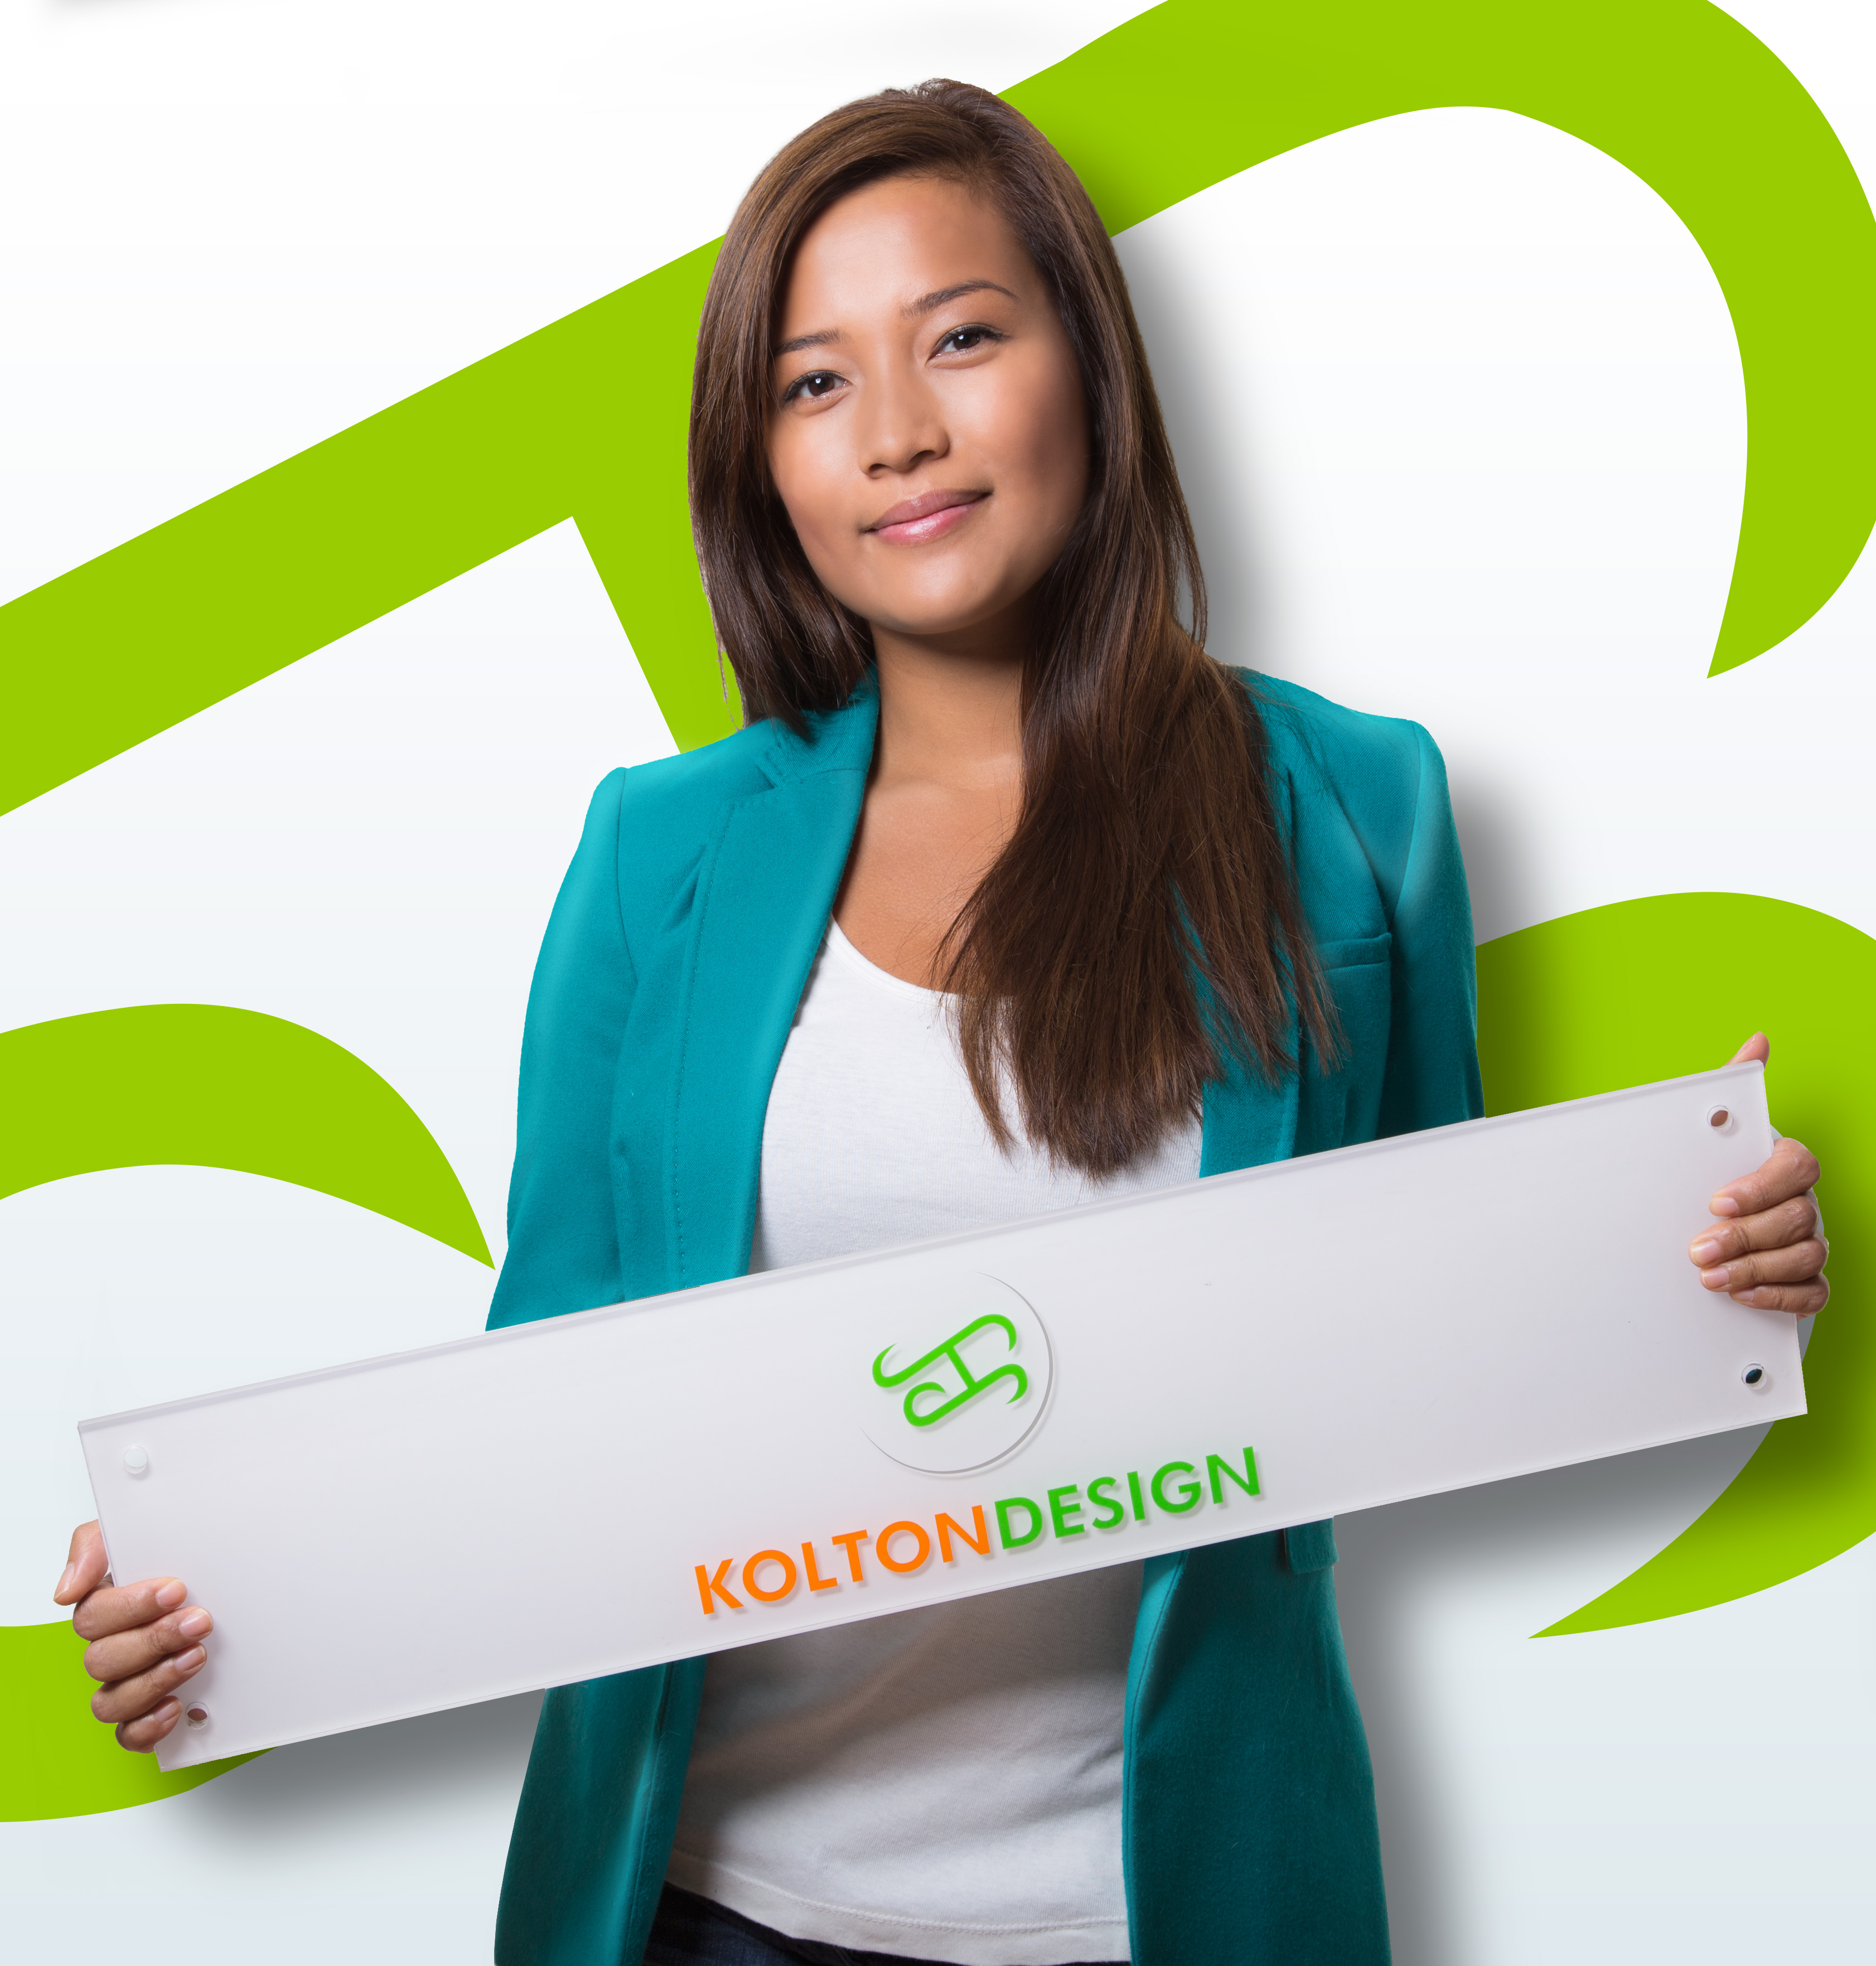 Kolton Design - Katherine Kolton